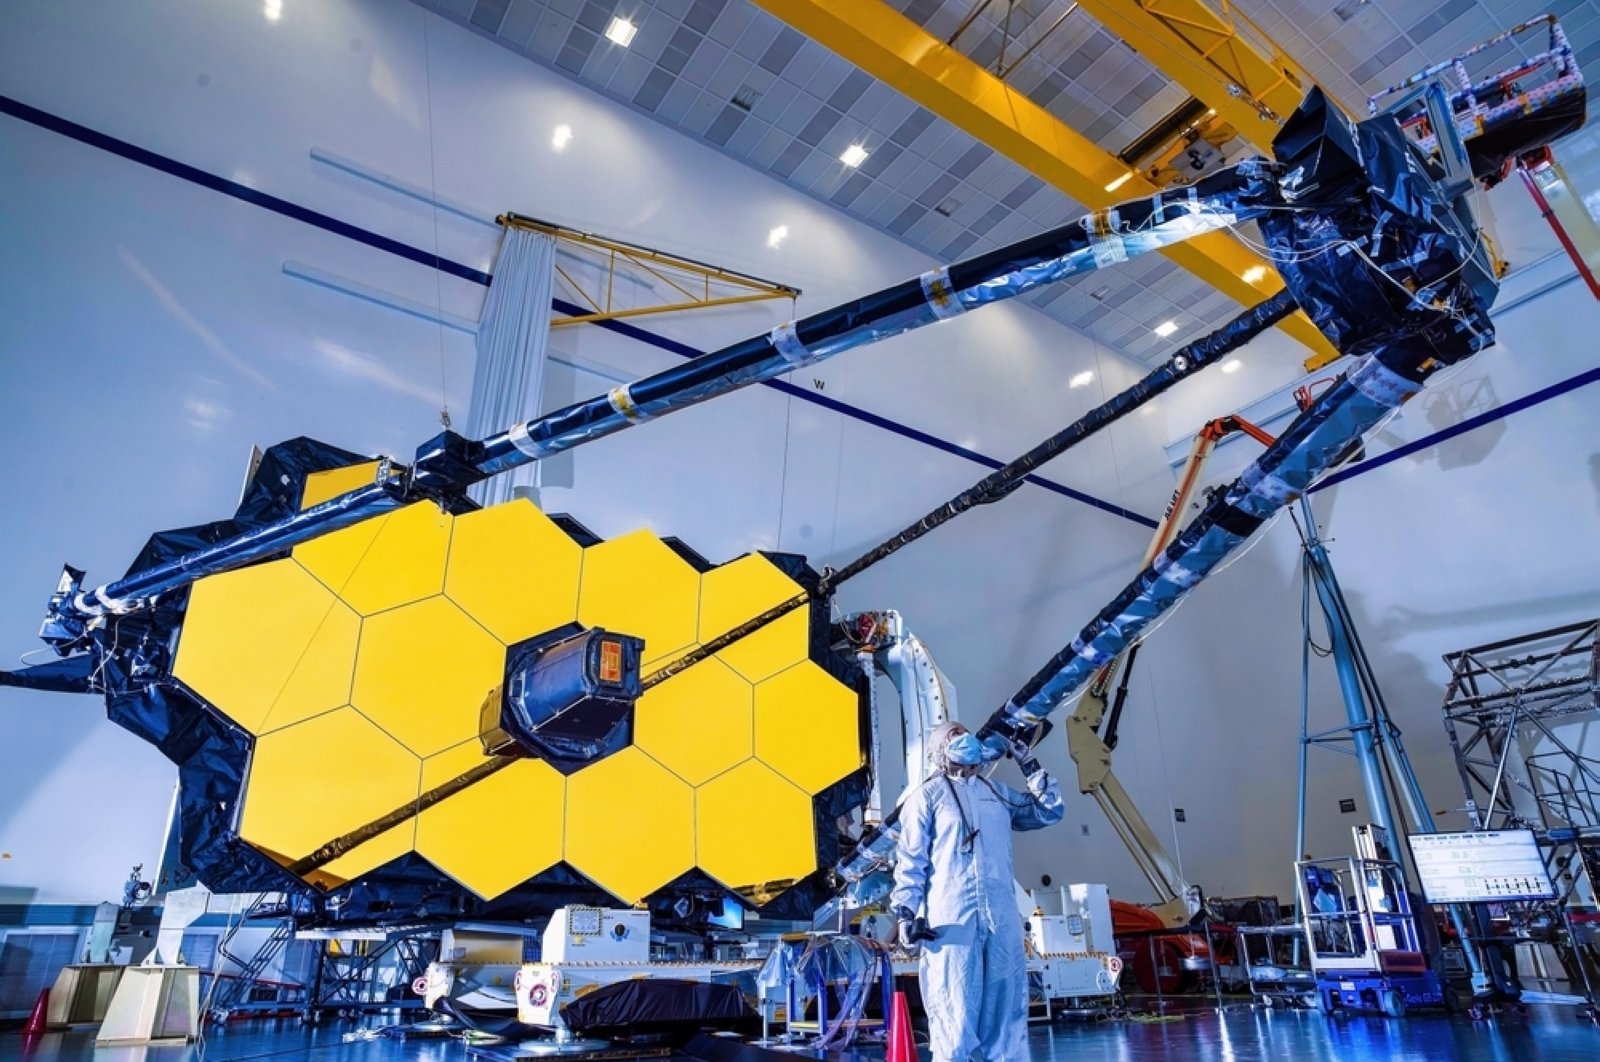 Micrometeoroid mencapai teleskop luar angkasa paling kuat di dunia